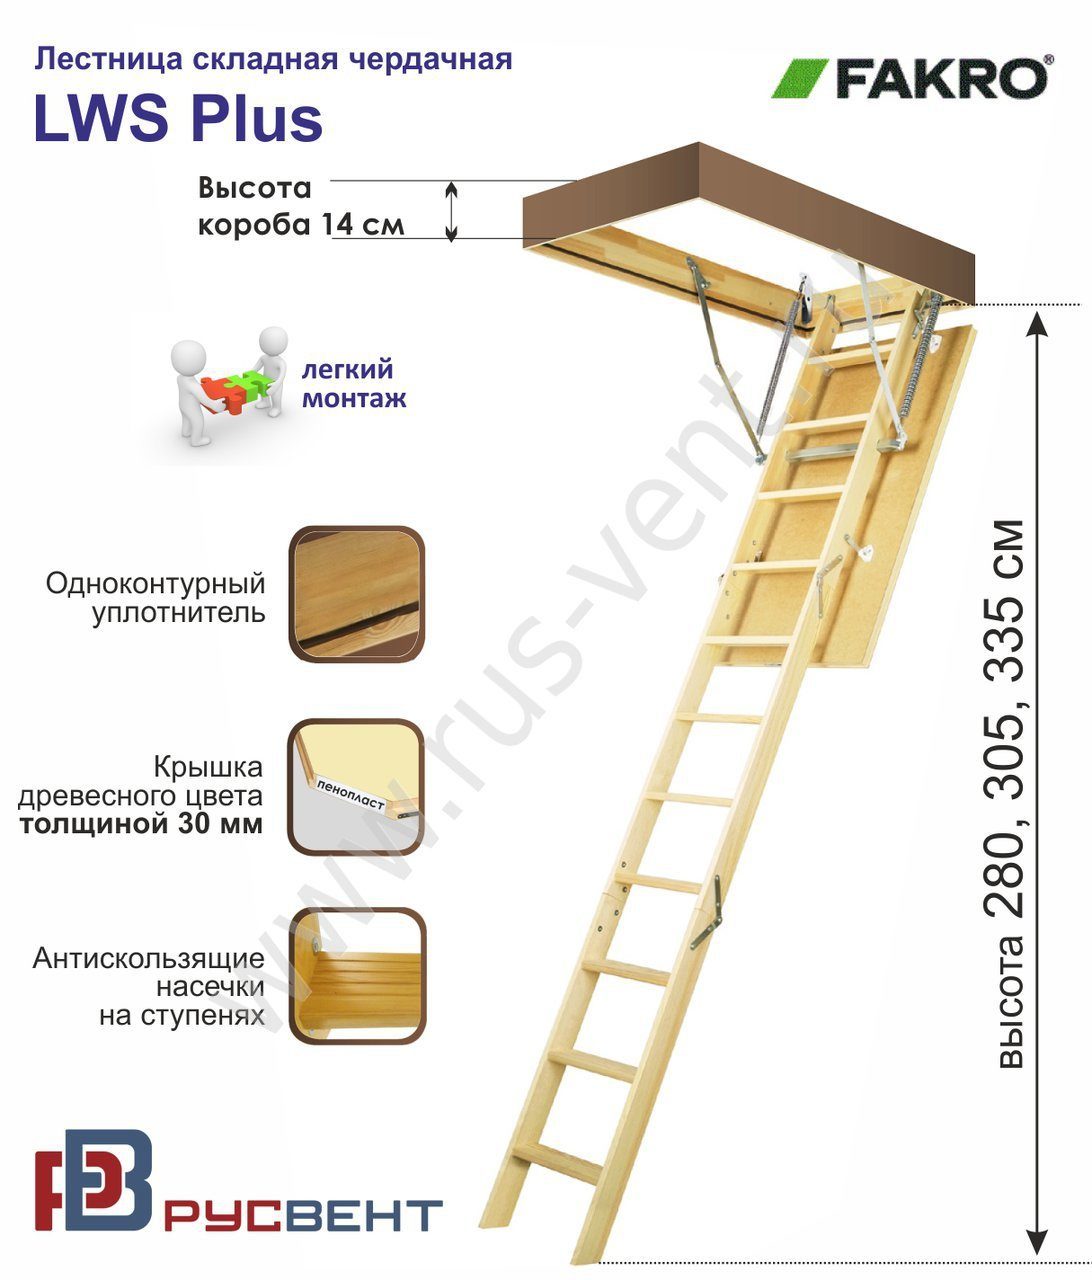 Чердачная лестница с люком размеры. Чердачная лестница 2100 высота. Чердачная лестница Fakro чертежи. Лестница чердачная lws Plus 70*140/305 схема. Лестница чердачная с шириной 80.